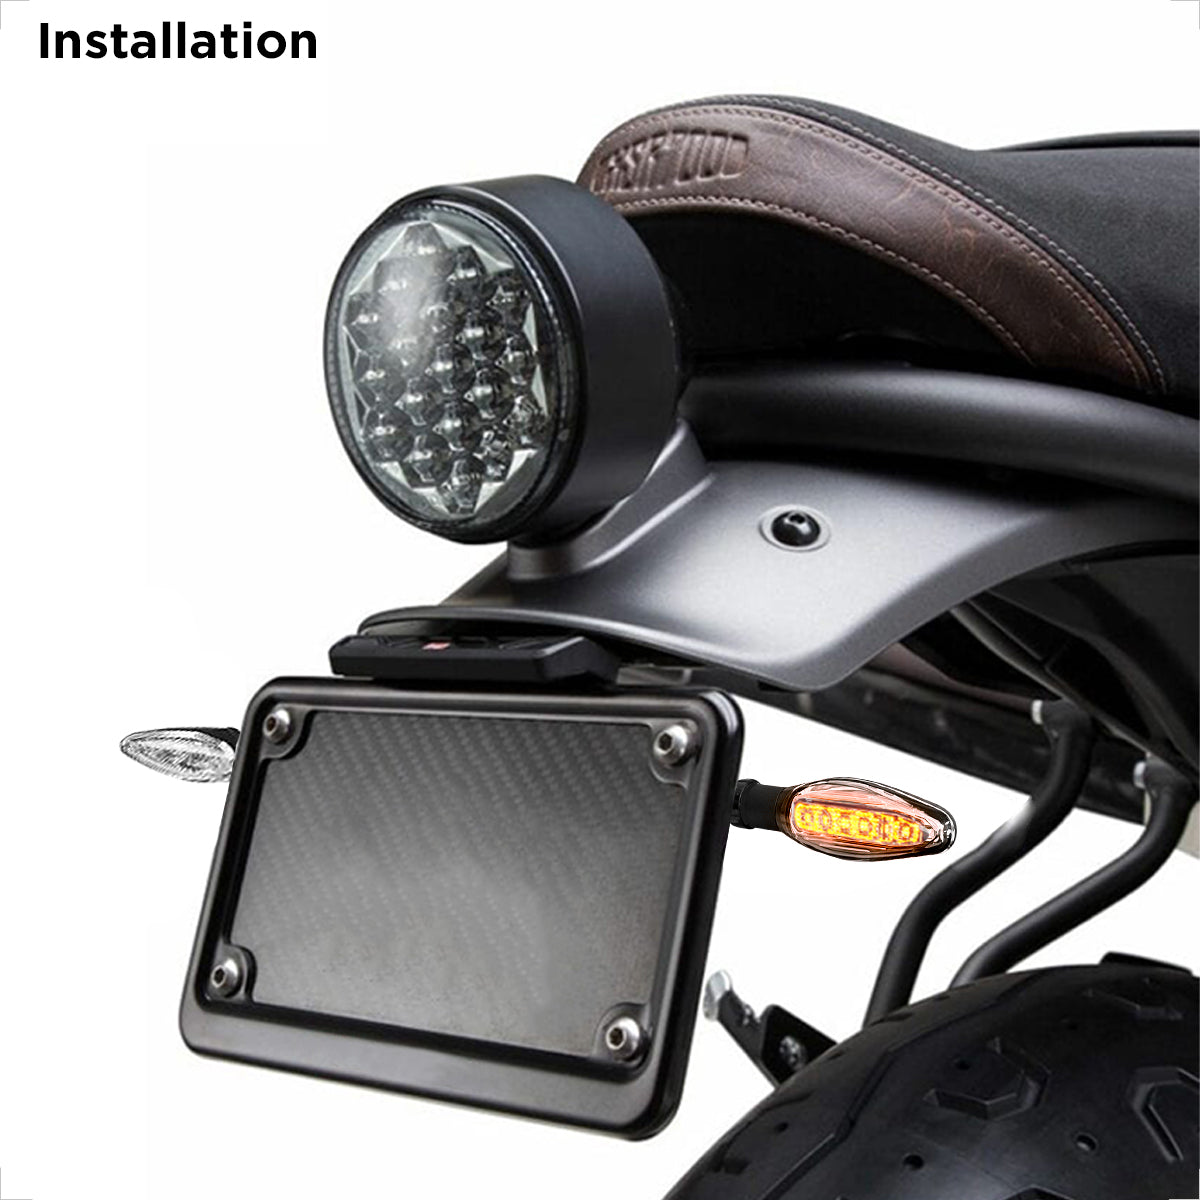 Evermotor Motorrad LED Blinker - 2 Stück, E-geprüft, Wasserdicht